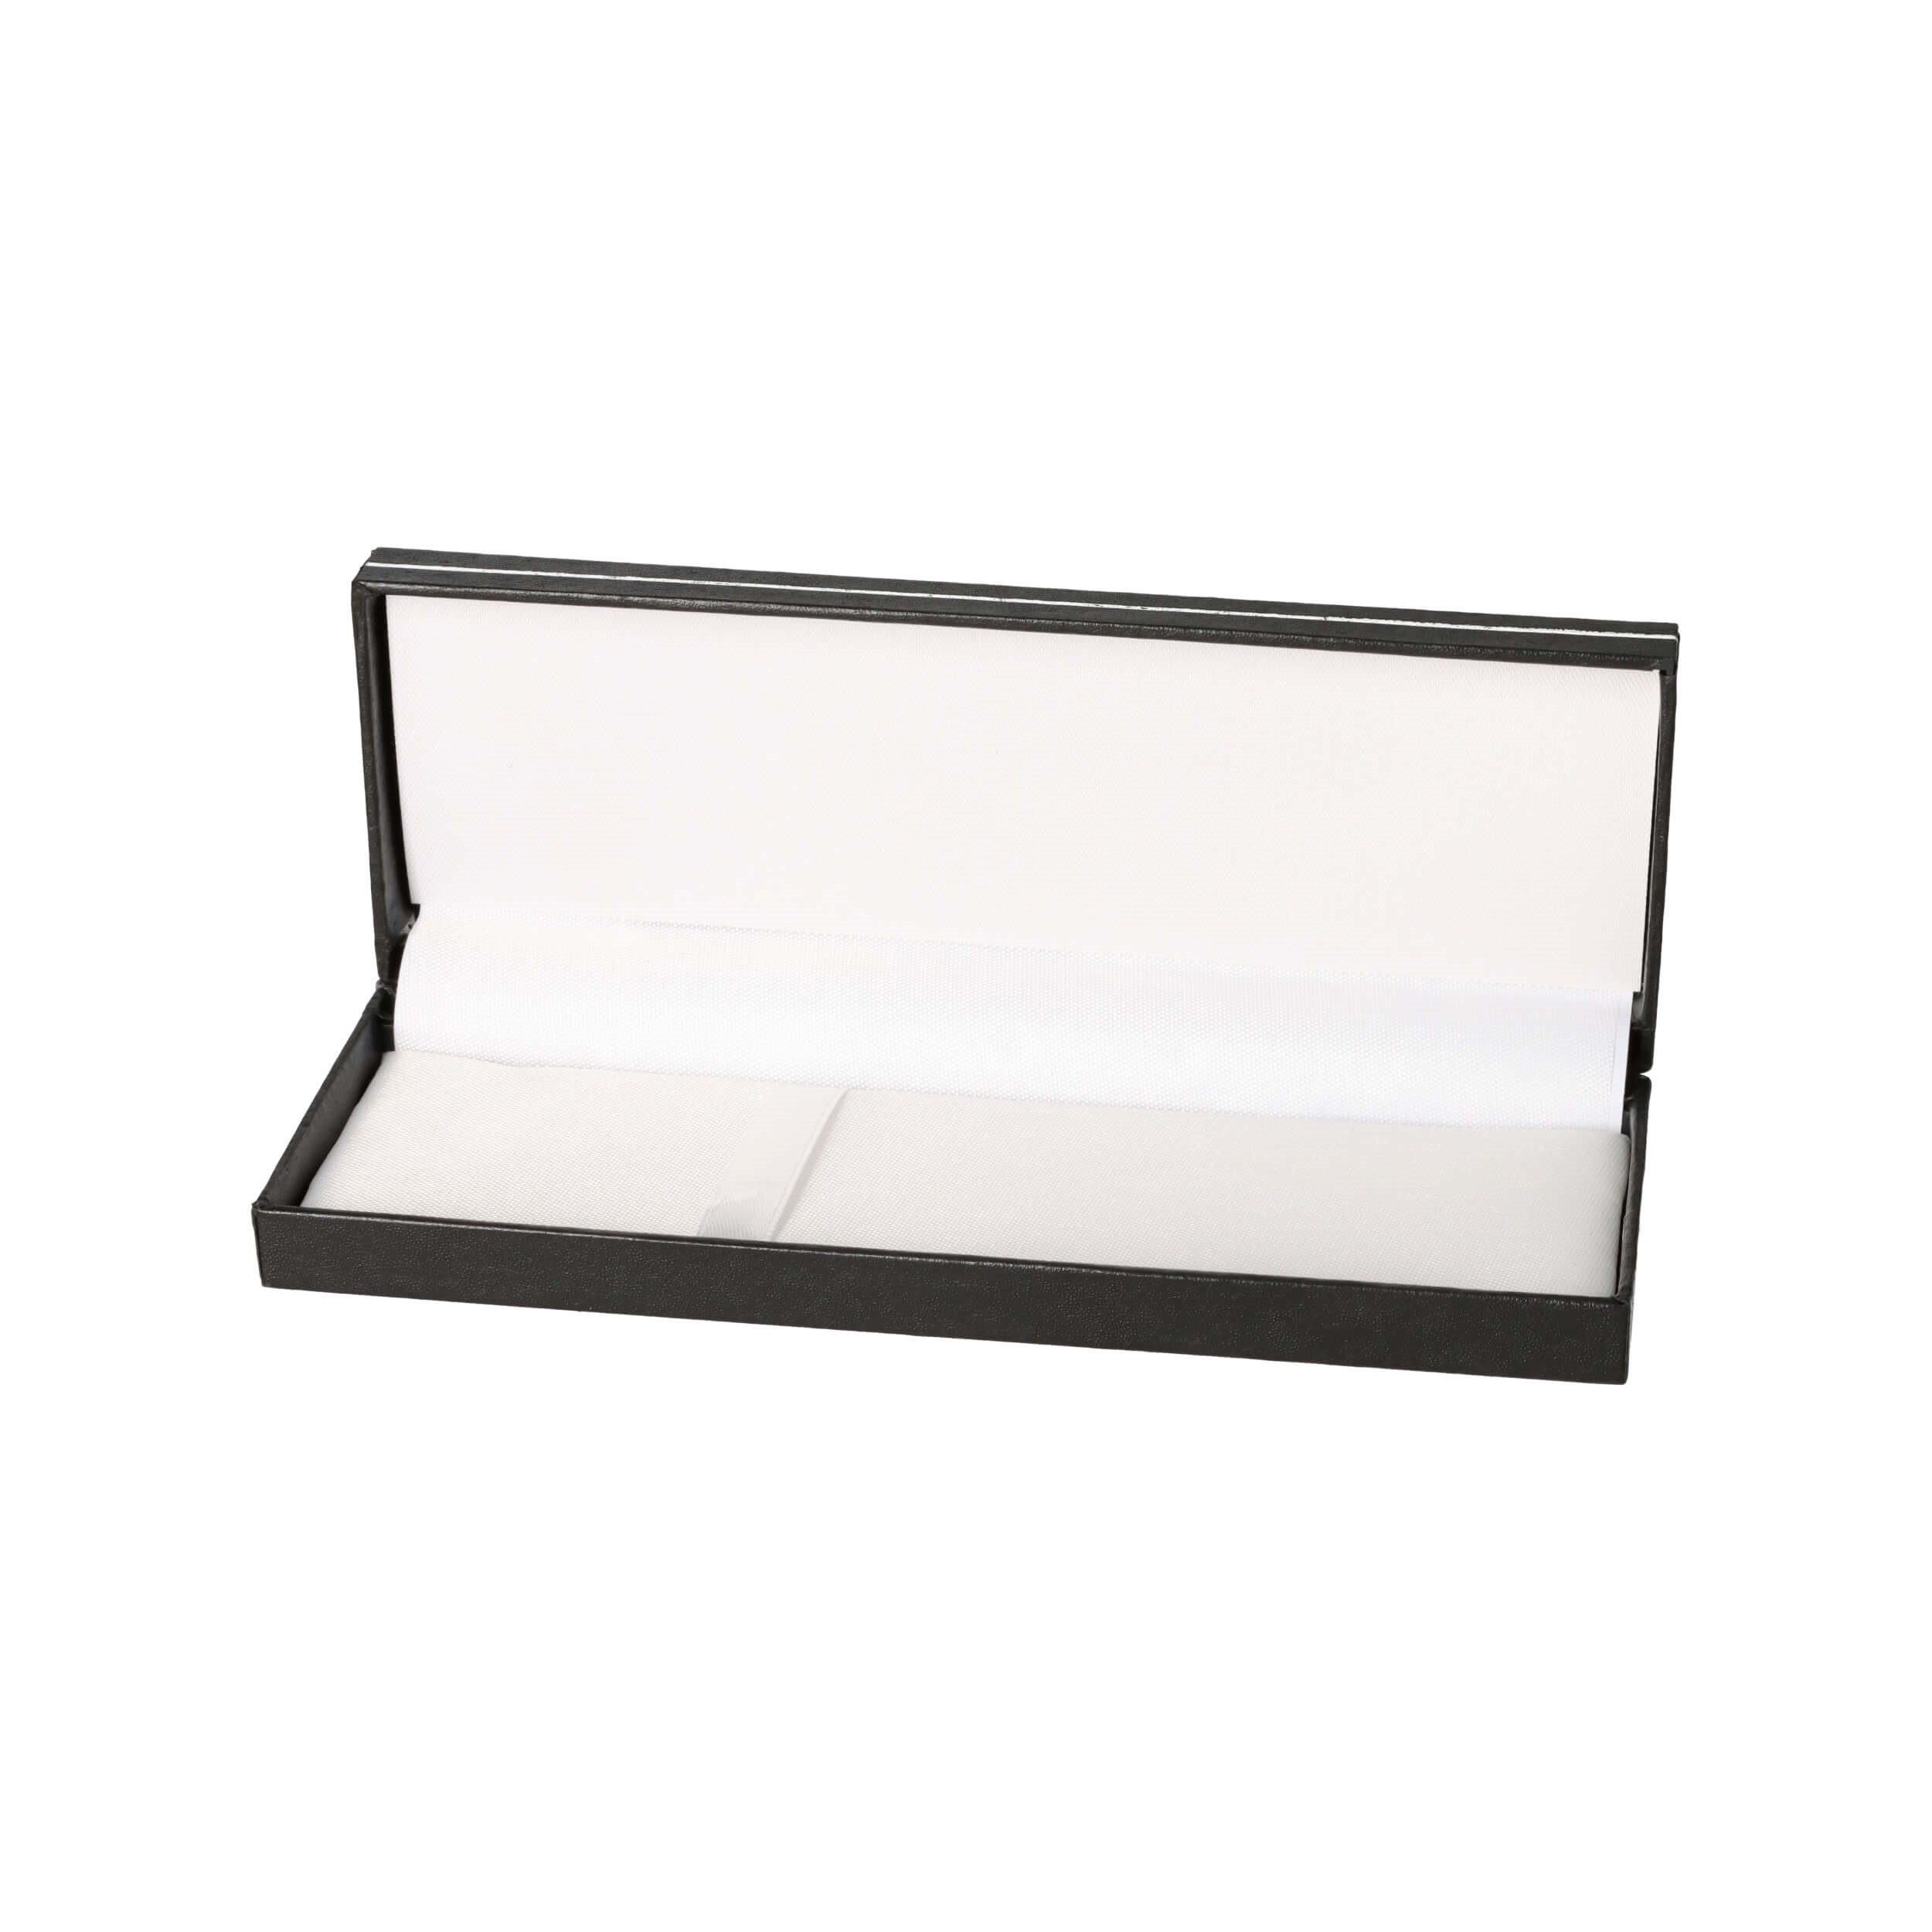 Biros geschenkverpakking zwart - Lederlook karton & papier - 170x62x25mm - Witte nylon voering - 74g lichtgewicht